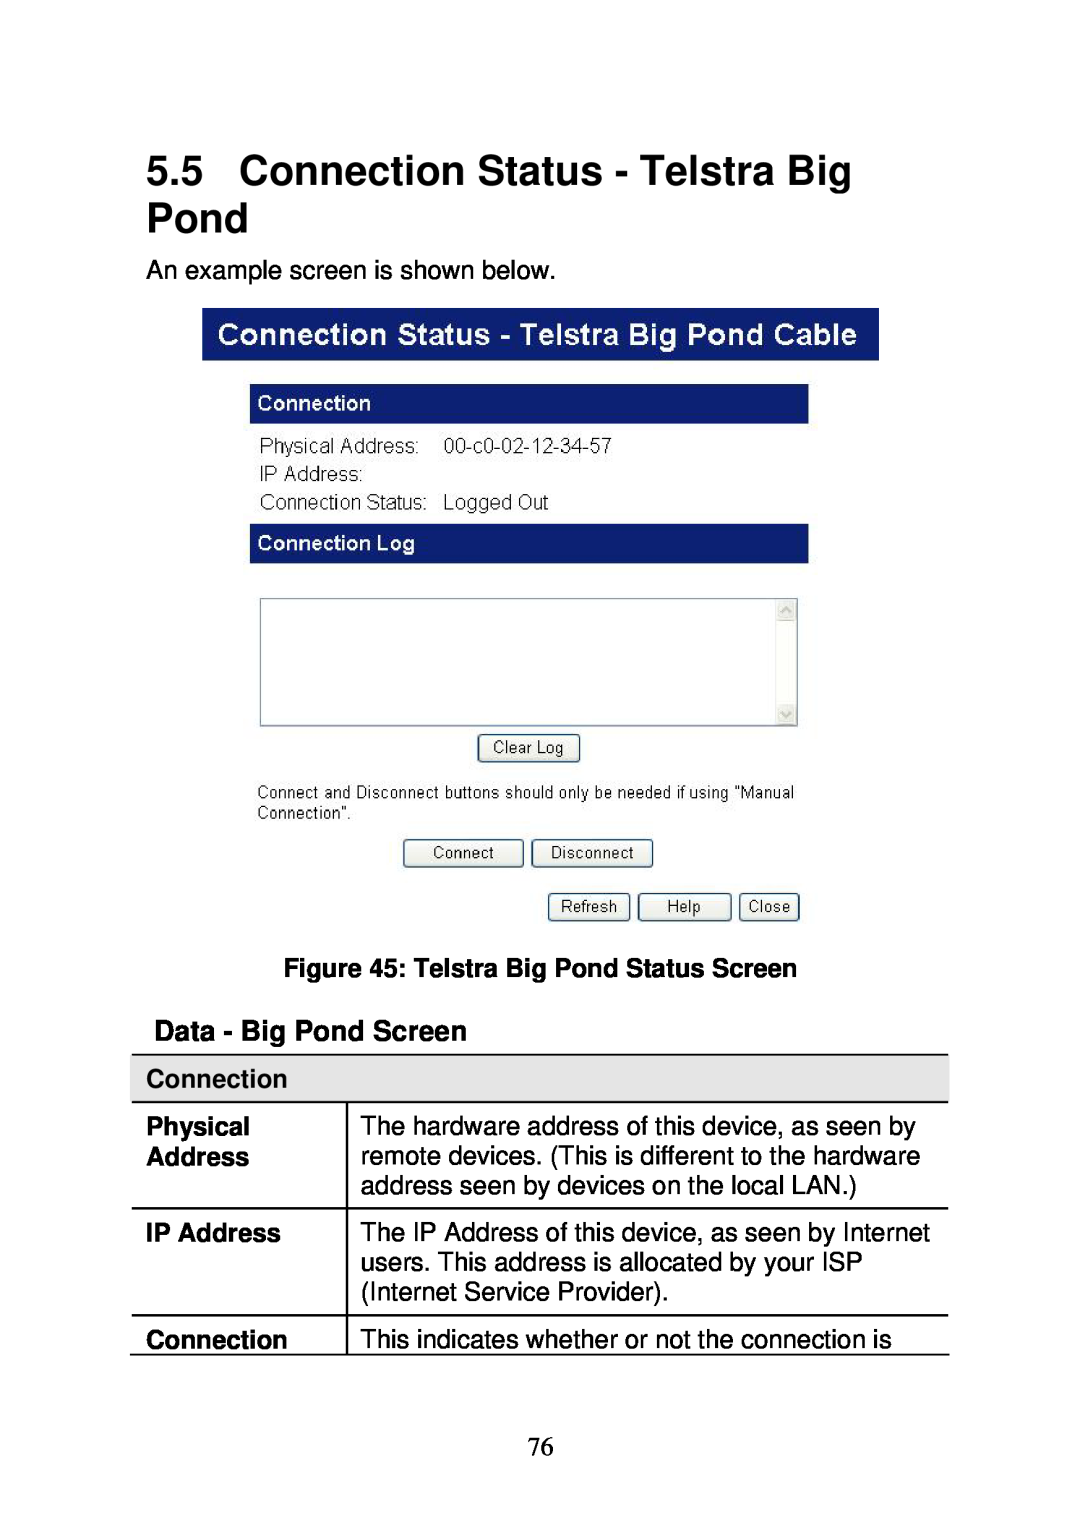 3Com WBR-6000 Connection Status - Telstra Big Pond, Data - Big Pond Screen, Telstra Big Pond Status Screen, Physical 